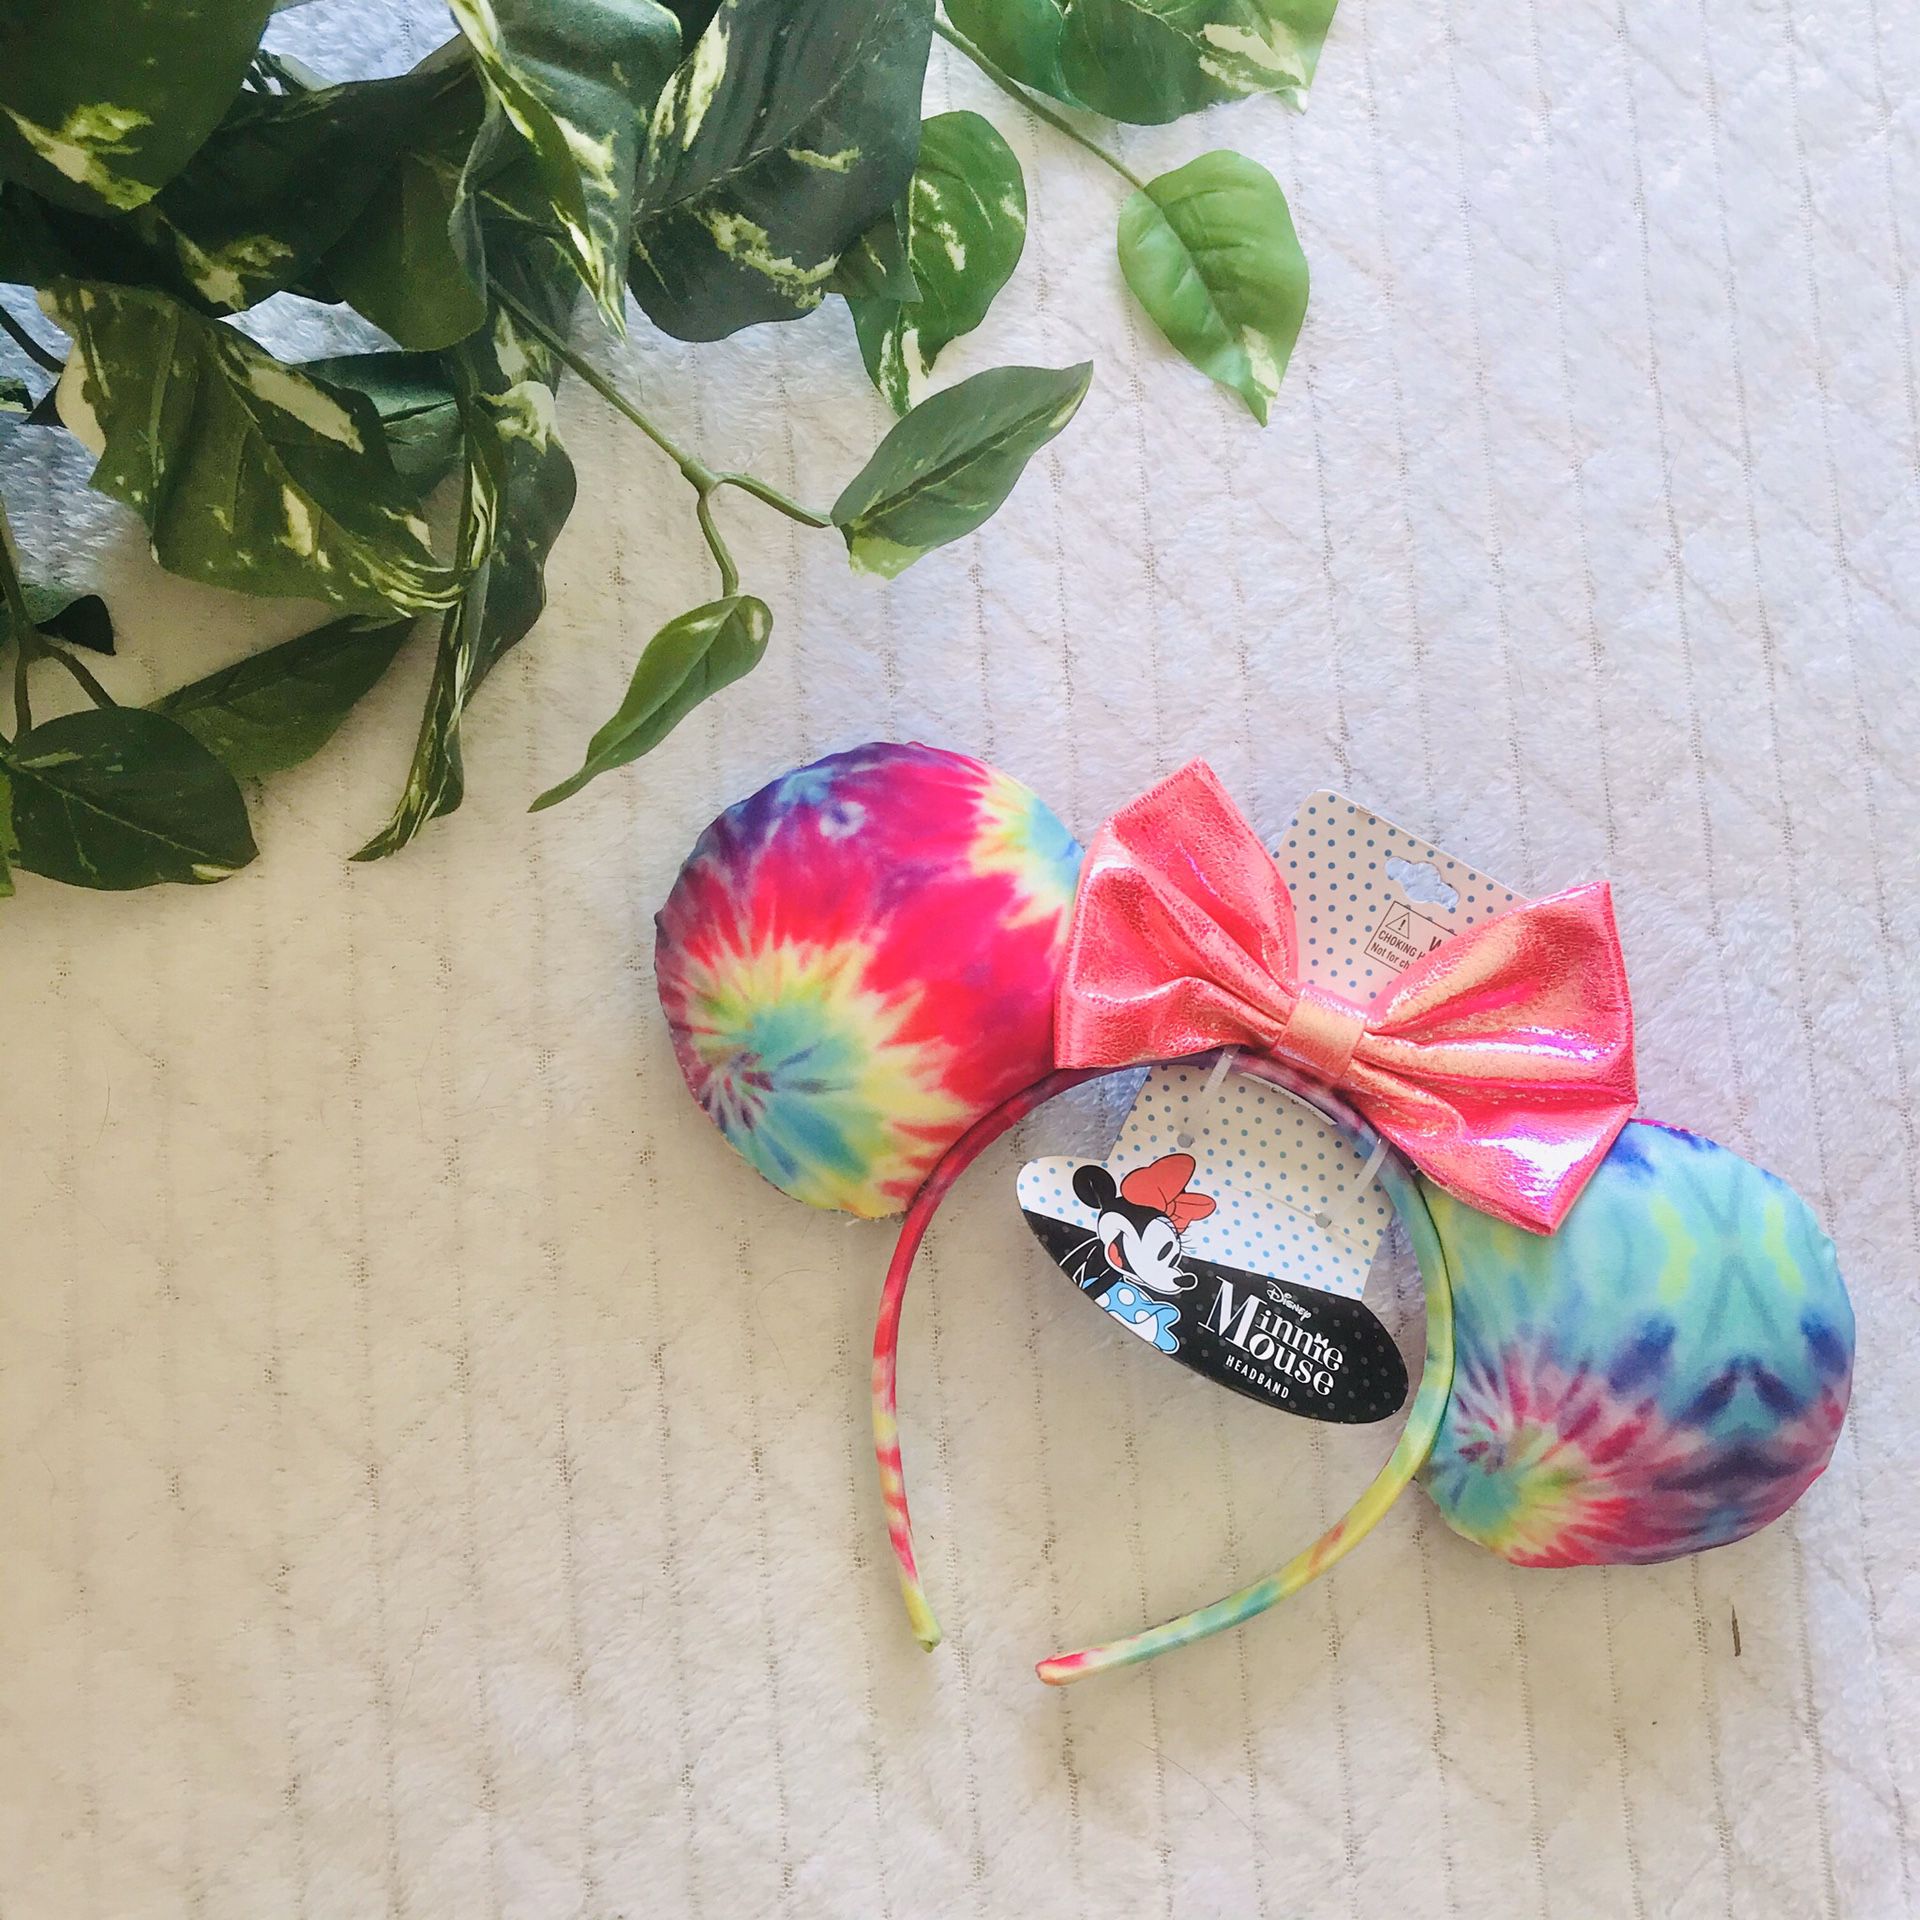 NWT Disney minnie mouse ears headband tie dye new